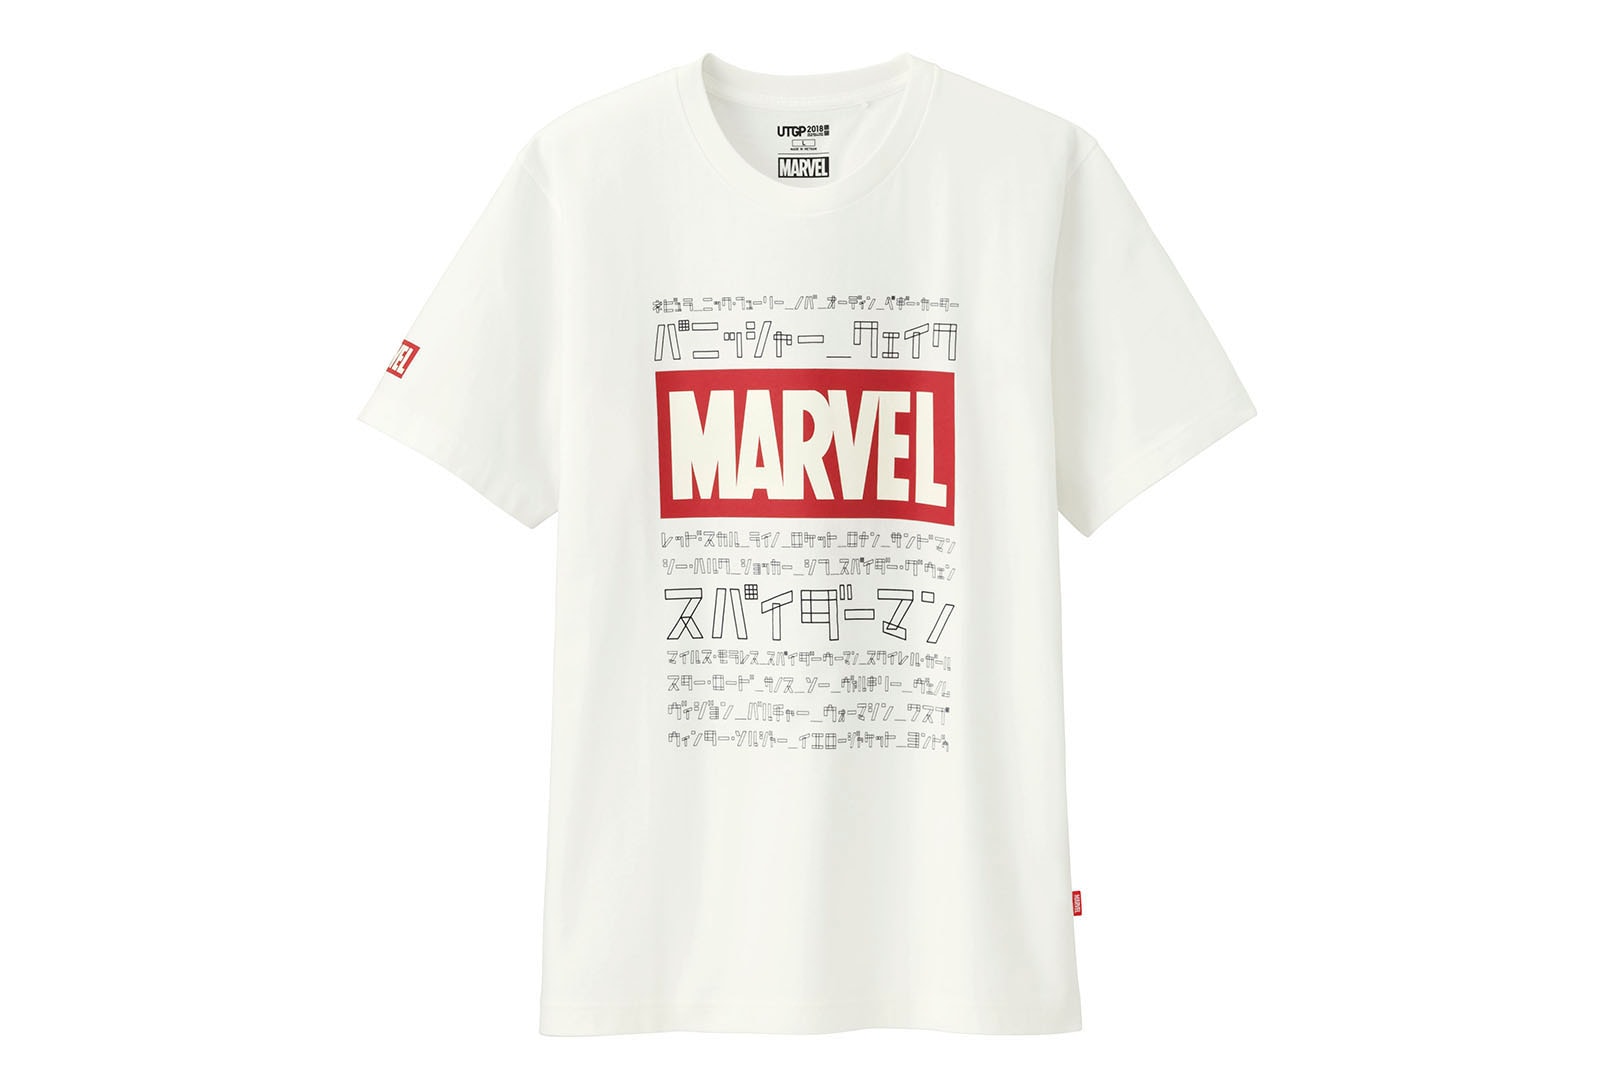 Uniqlo Marvel UT Grand Prix 2018 T-Shirt Collection Captain America Iron Man Spiderman Hulk Guardians of The Galaxy